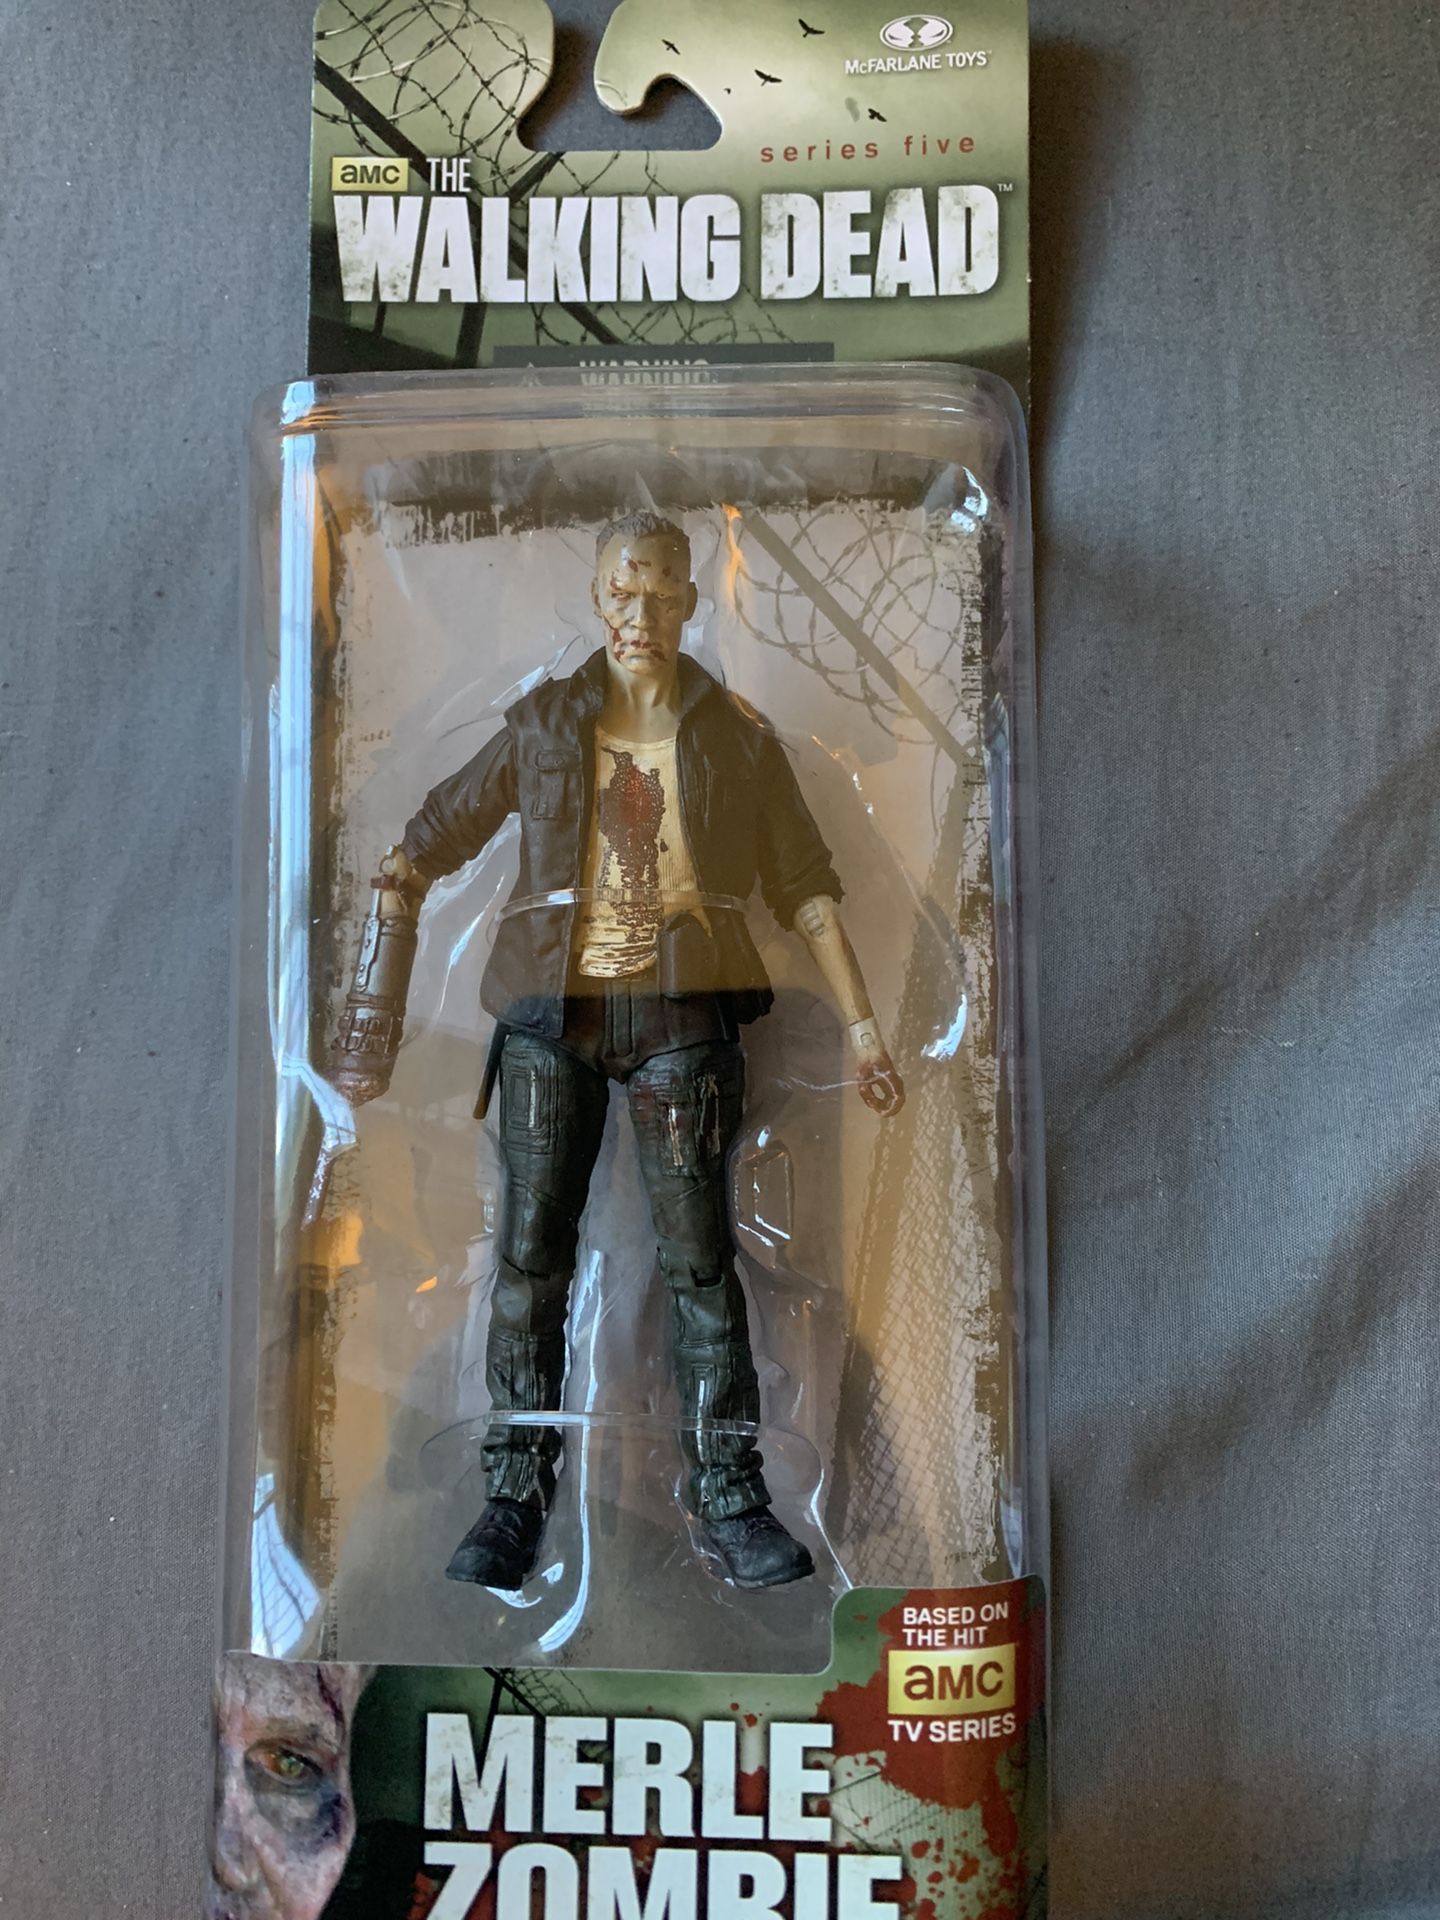 The Walking Dead Merle zombie action figure